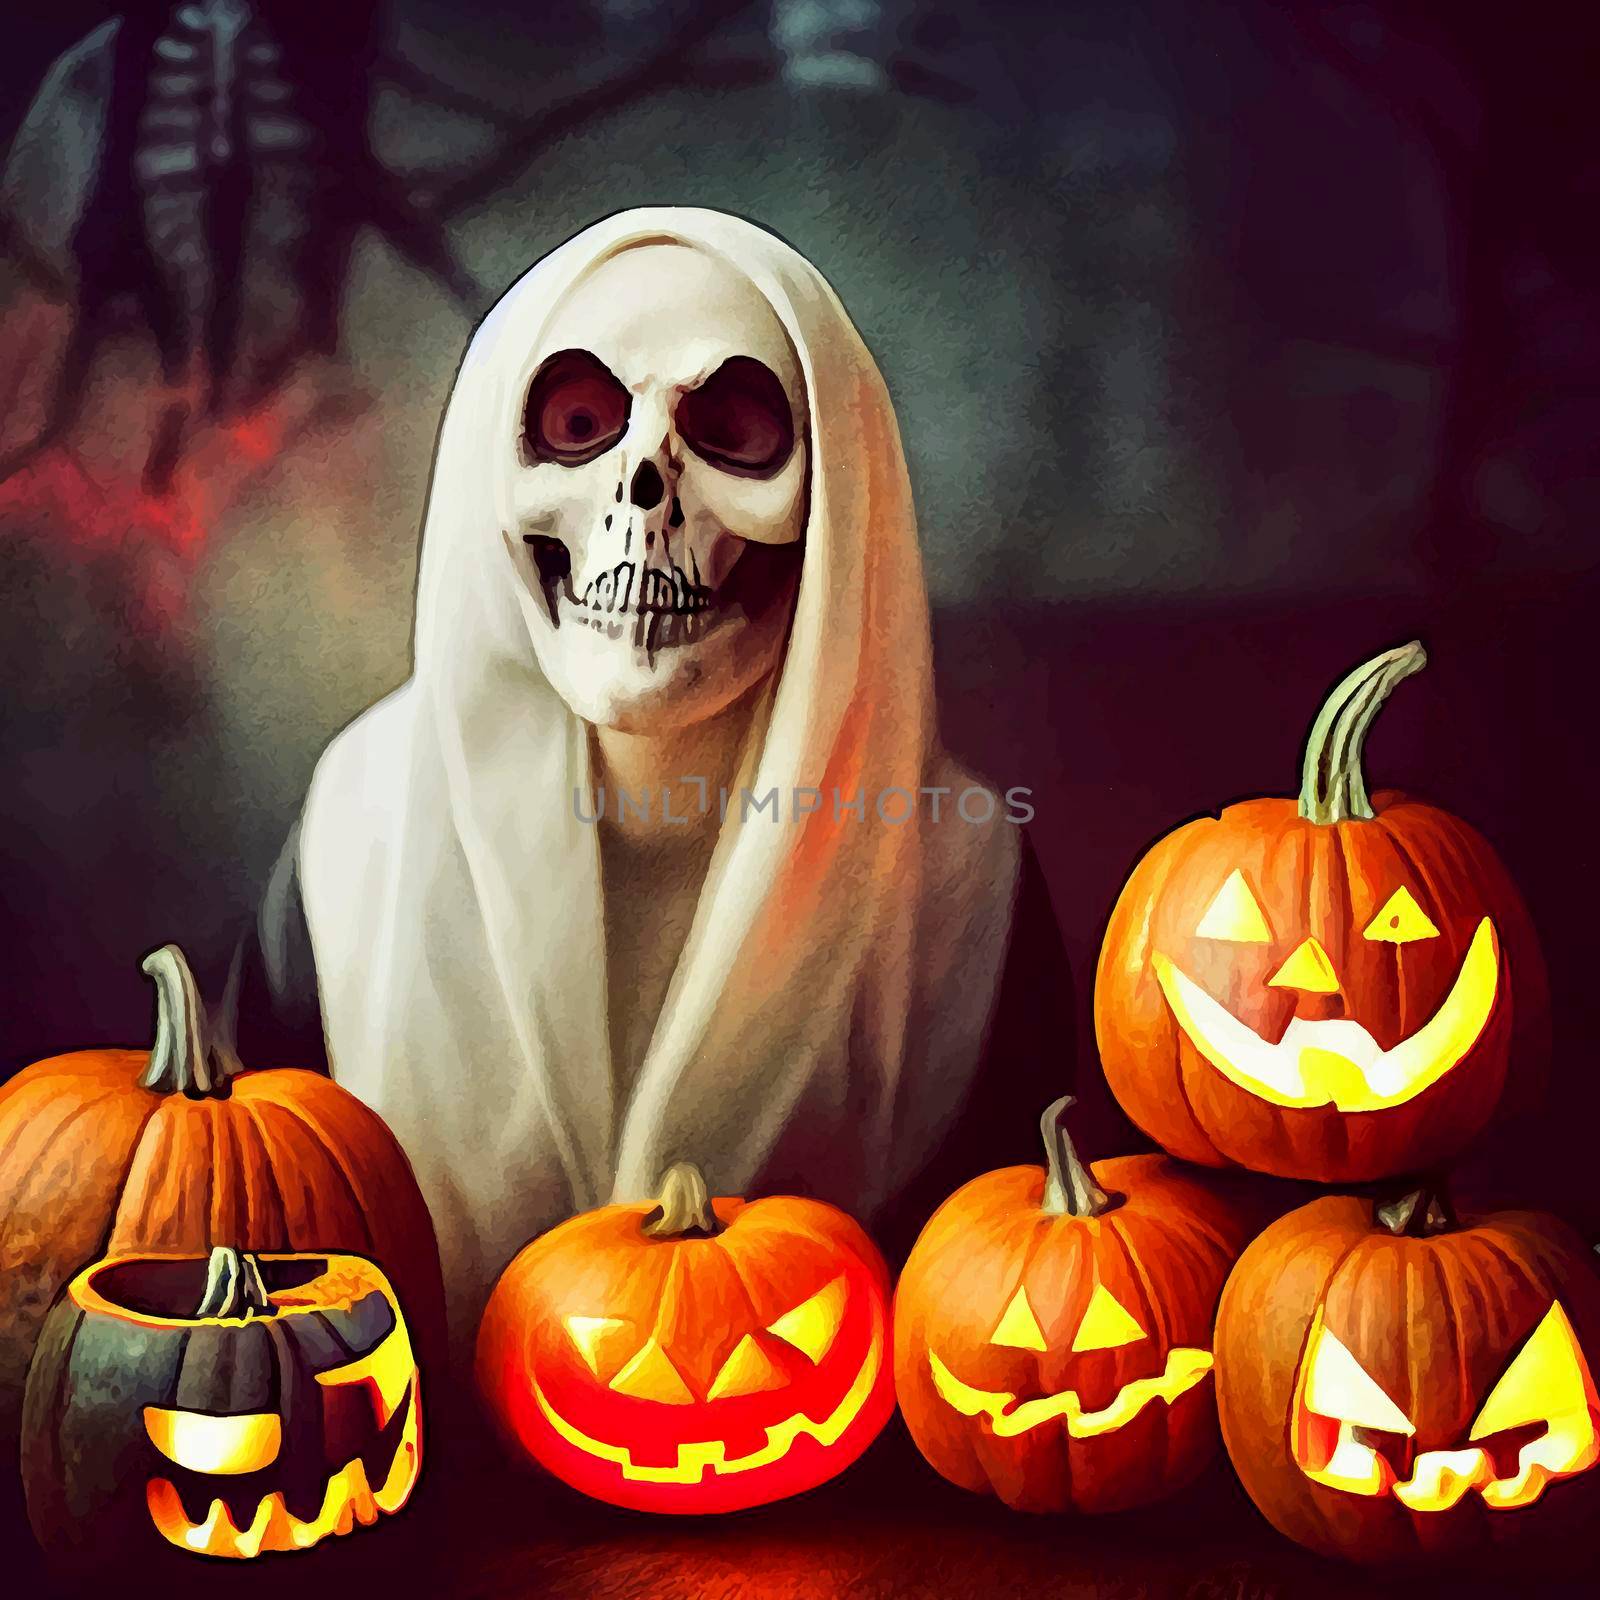 skull on halloween night with evil pumpkins. hallowen illustration by JpRamos